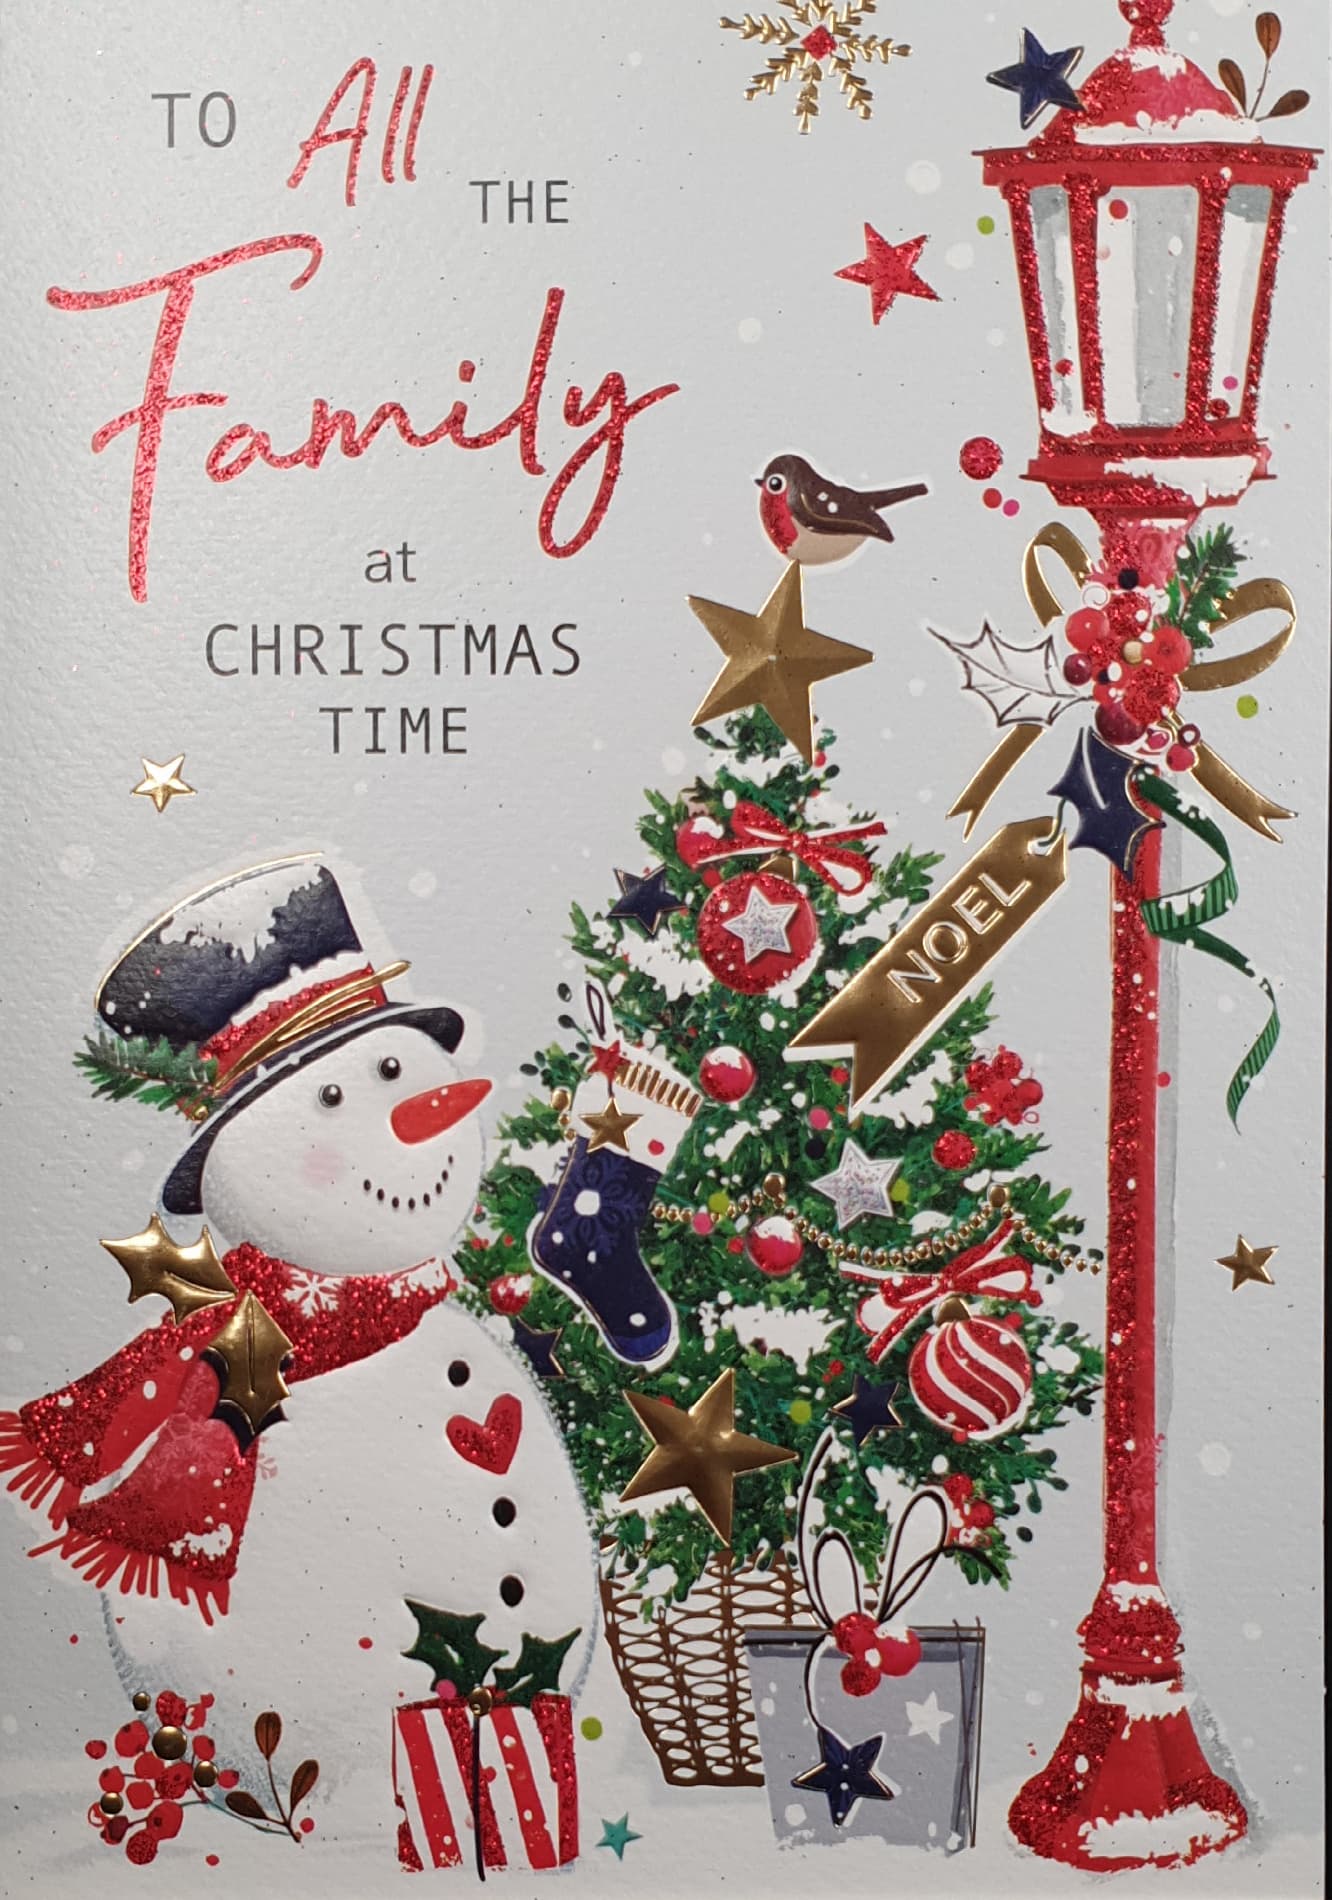 All The Family Christmas Card - Robin on Christmas Tree & Happy Snowman